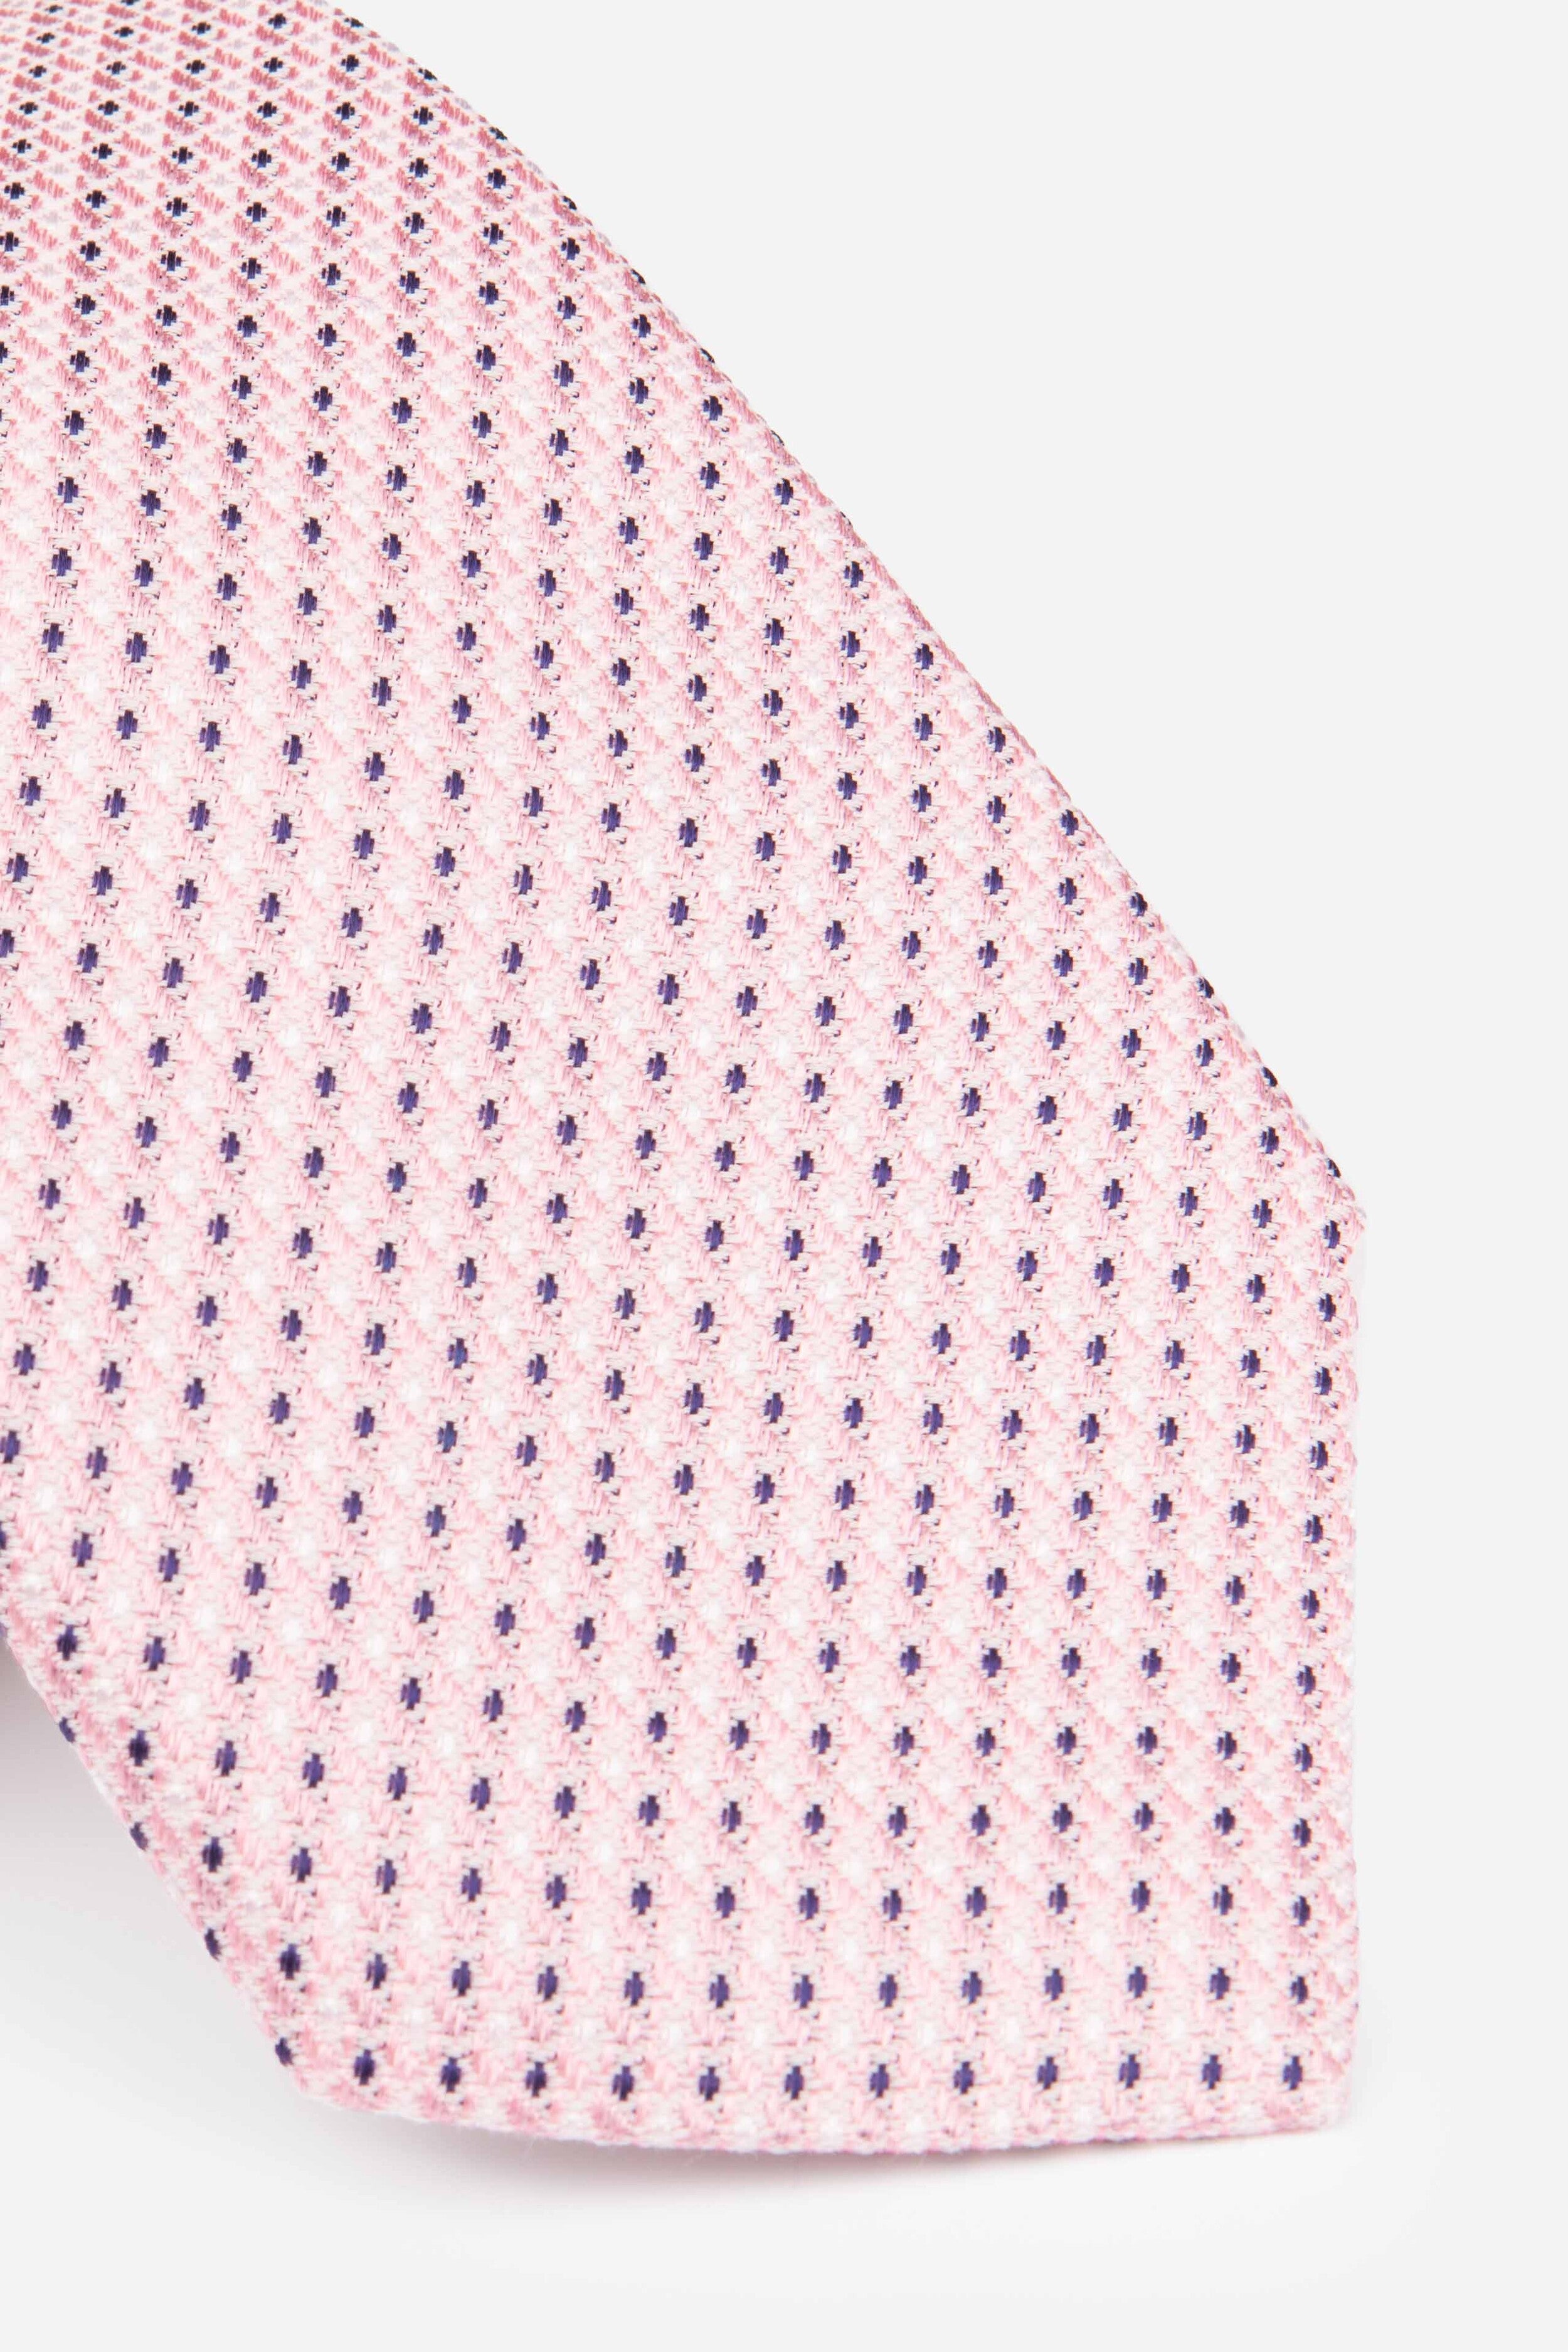 Geometric patterned tie - Pink pattern